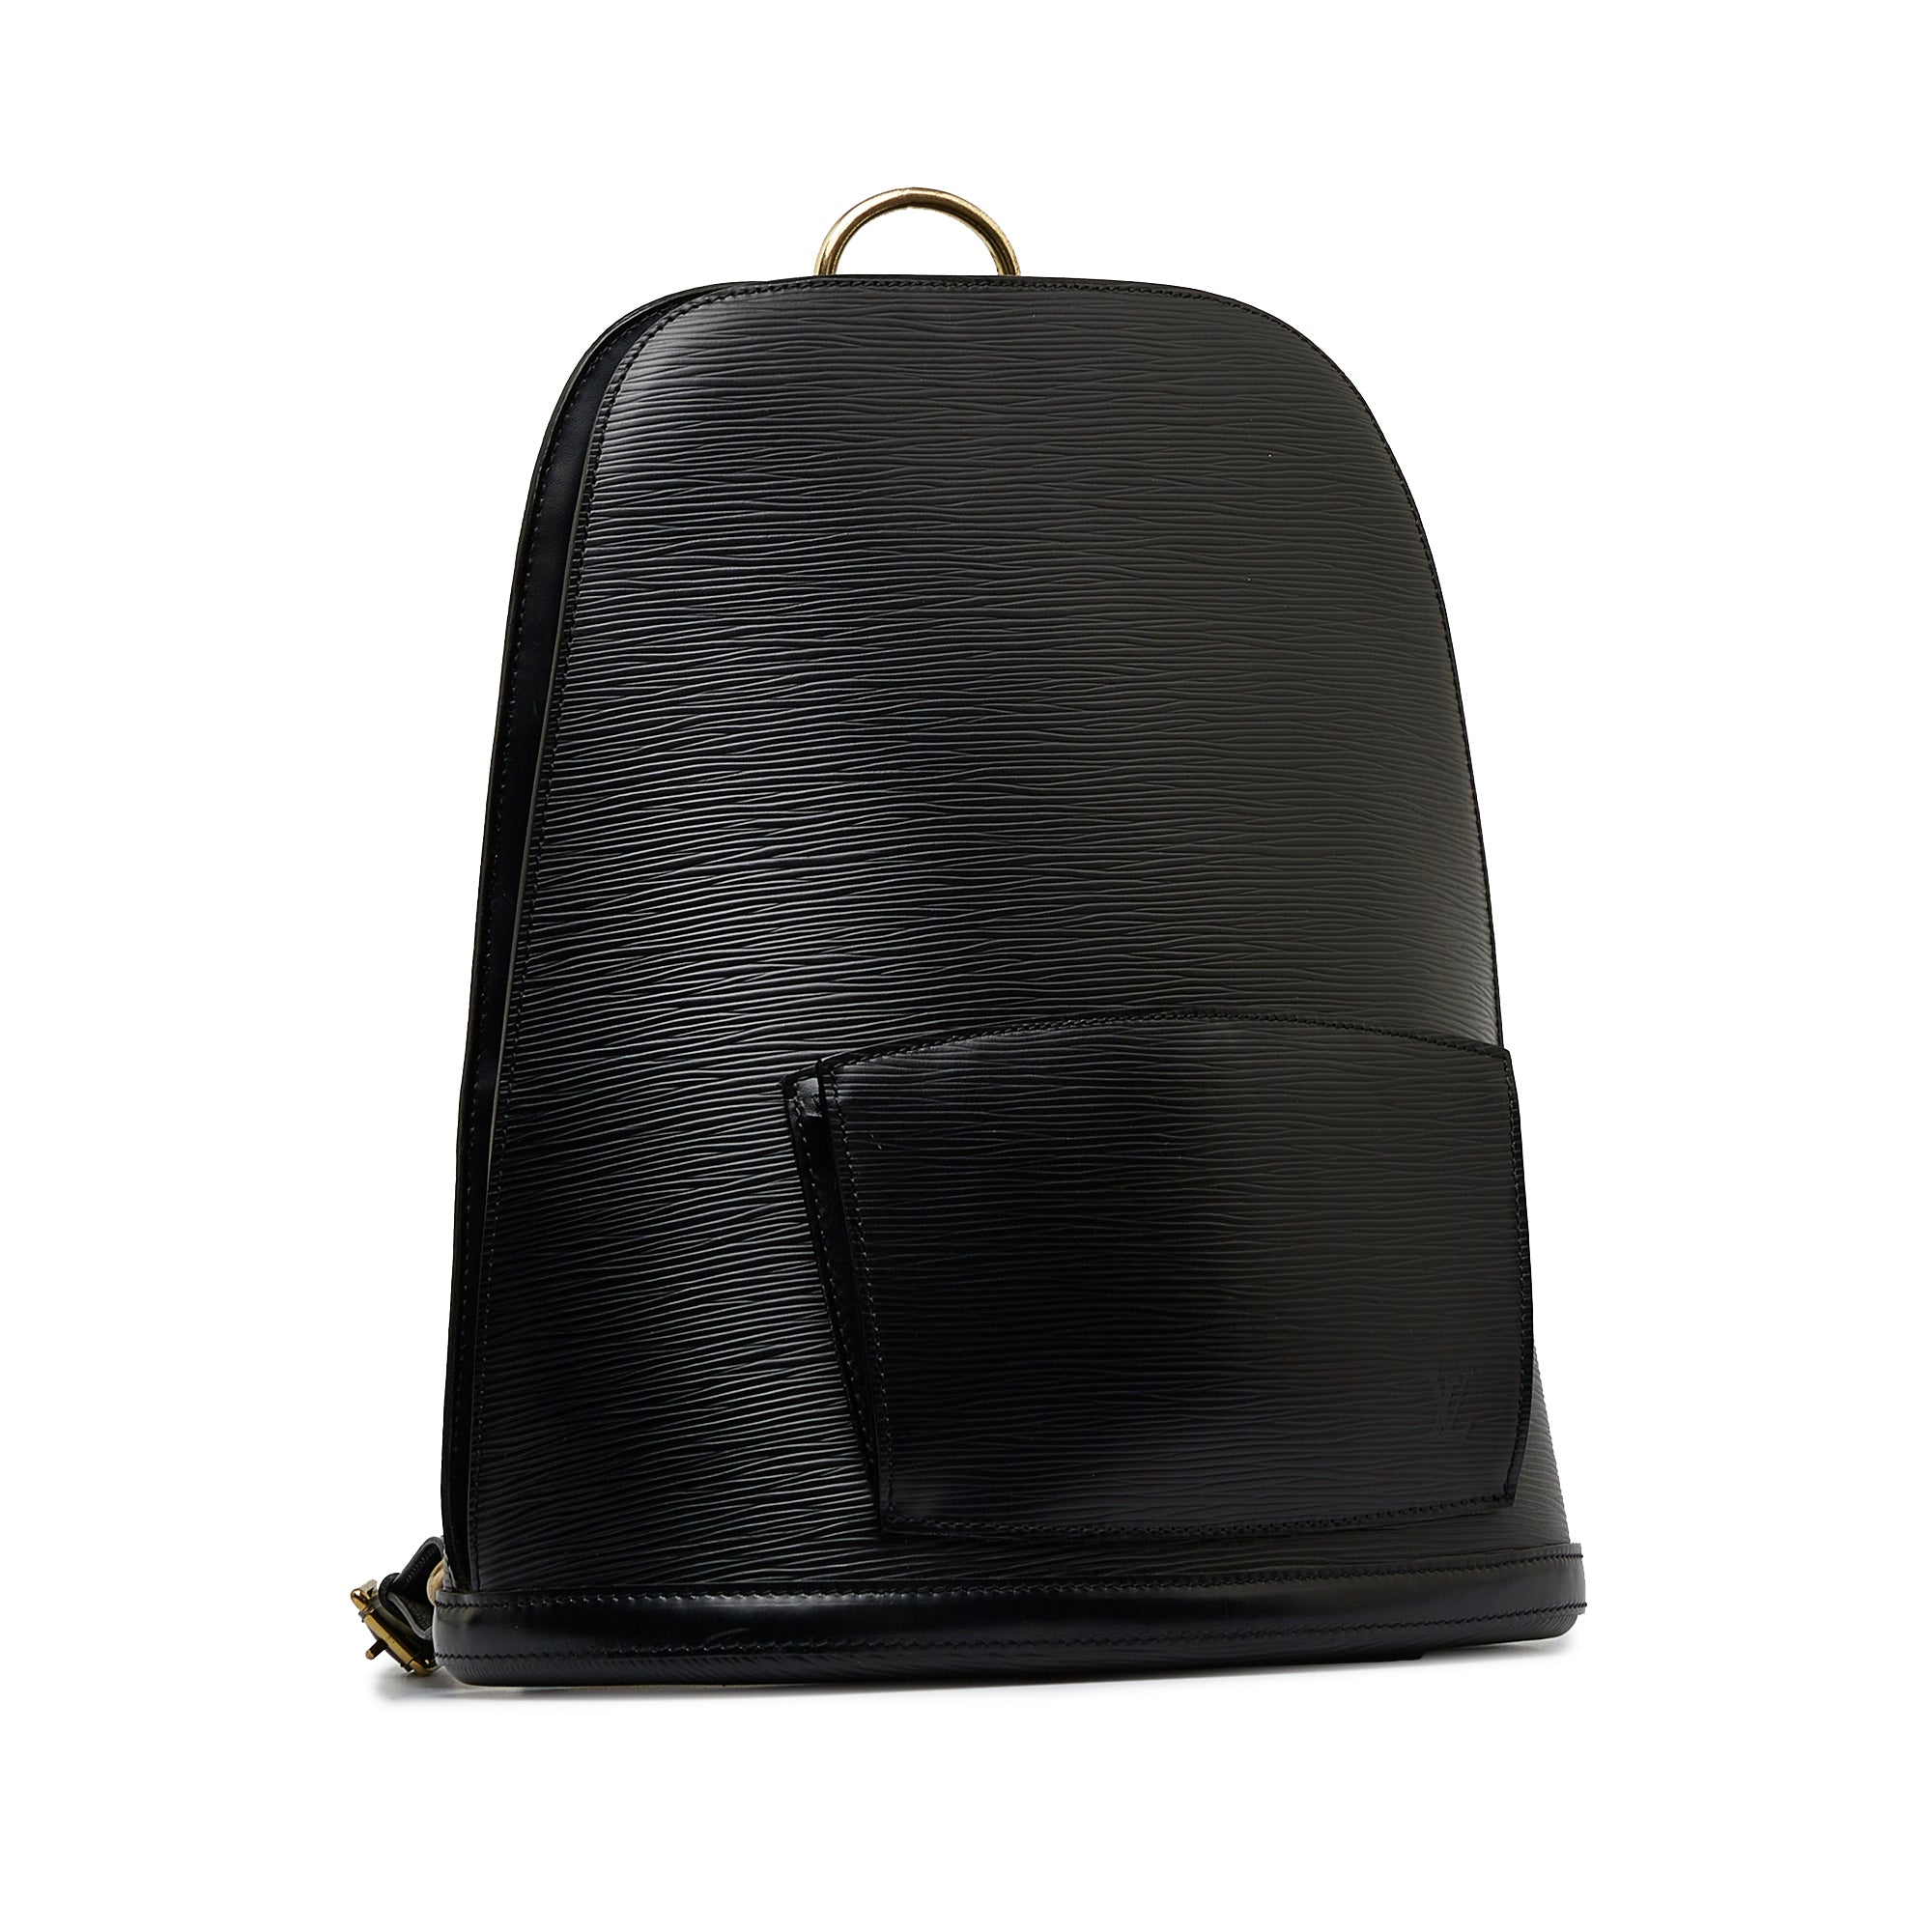 Louis Vuitton Gobelins Epi Leather Backpack on SALE